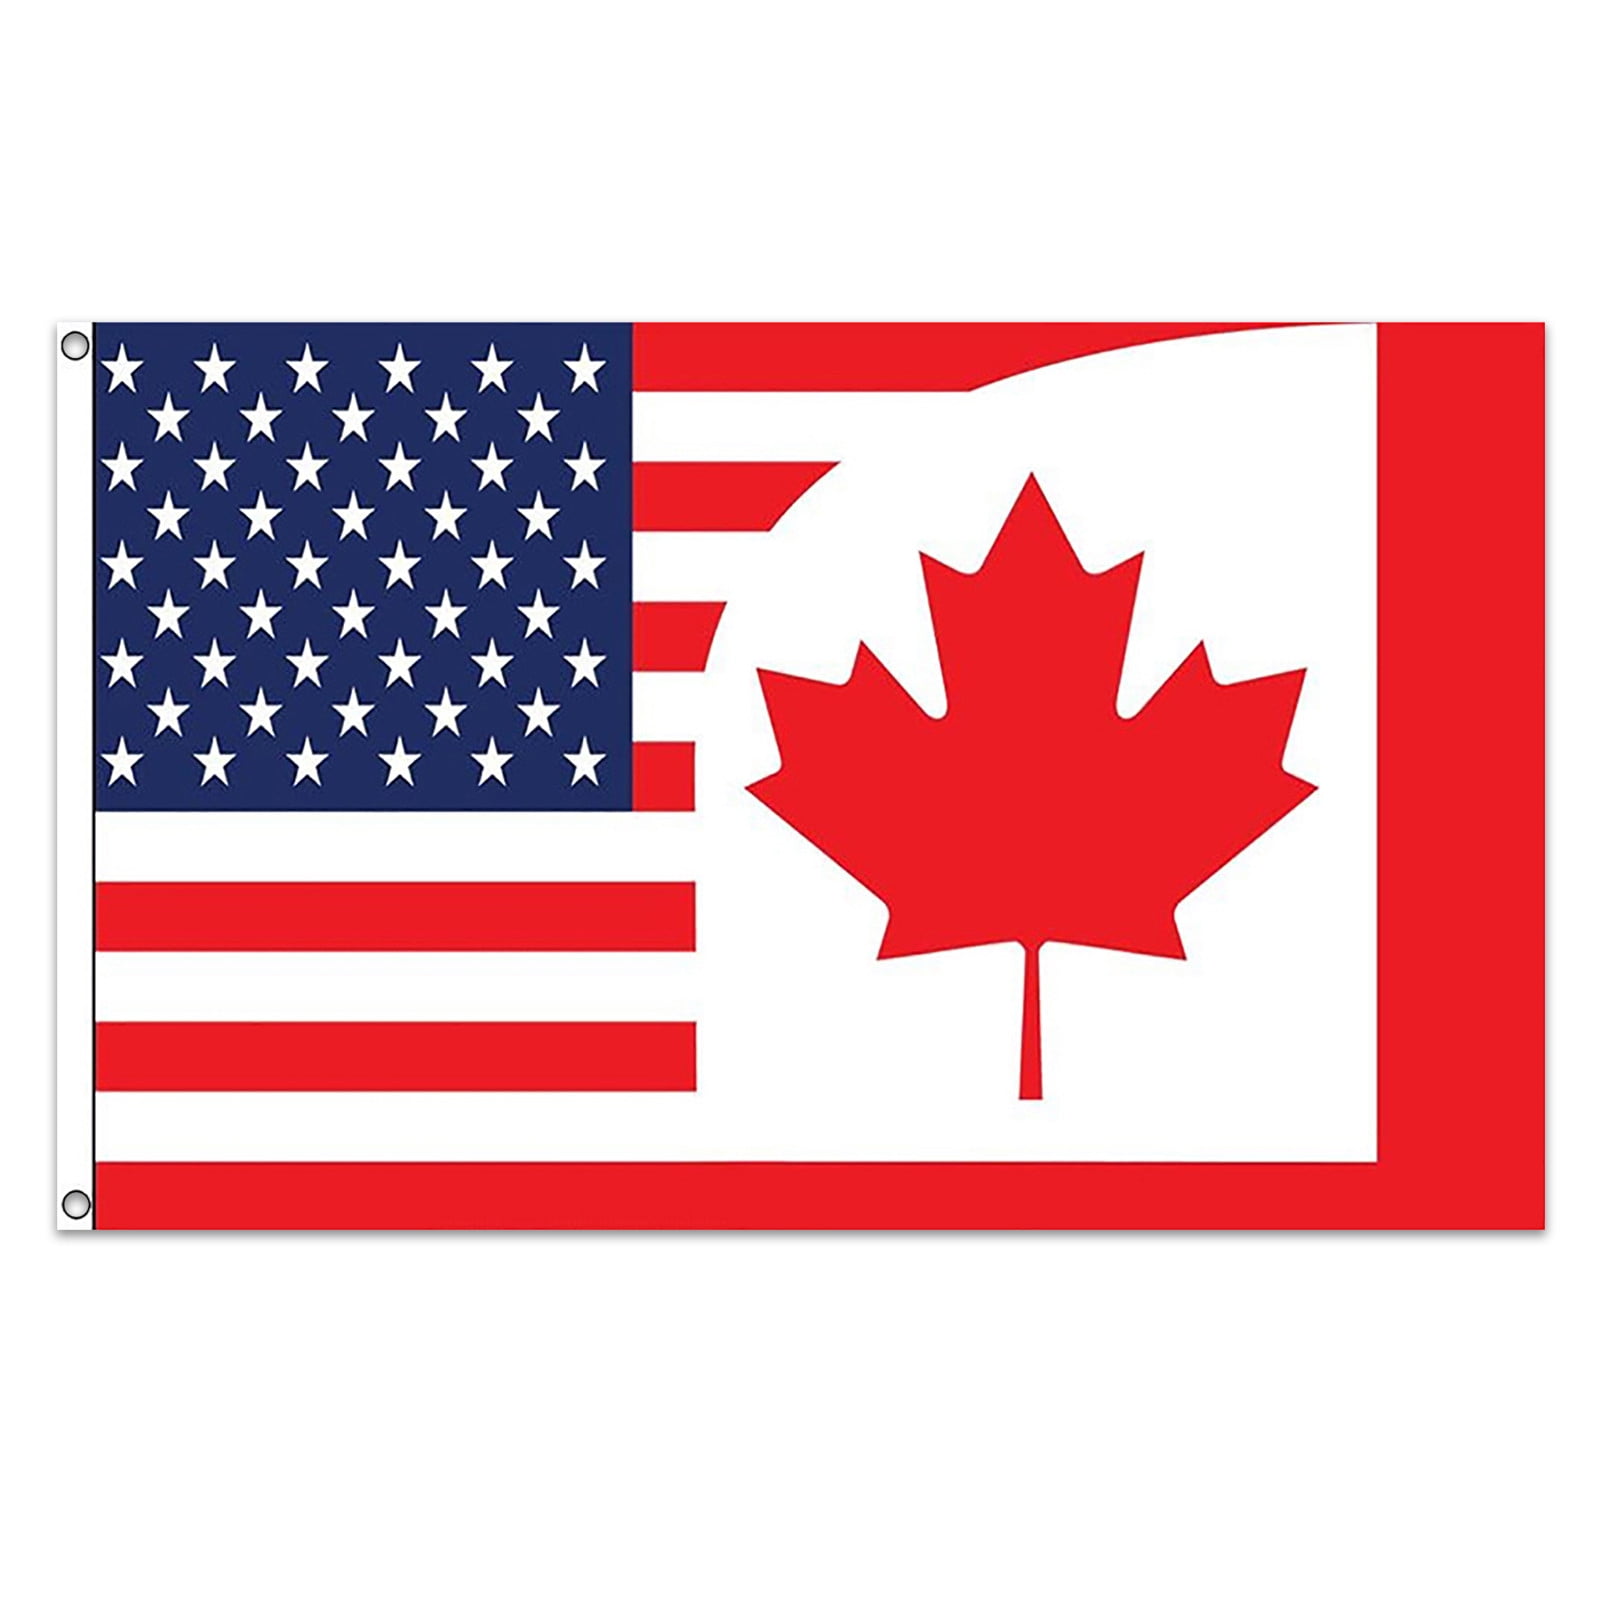 Canada Applique & Embroidered Garden Flag Nationality 12.5 x 18 Briarwood Lane 